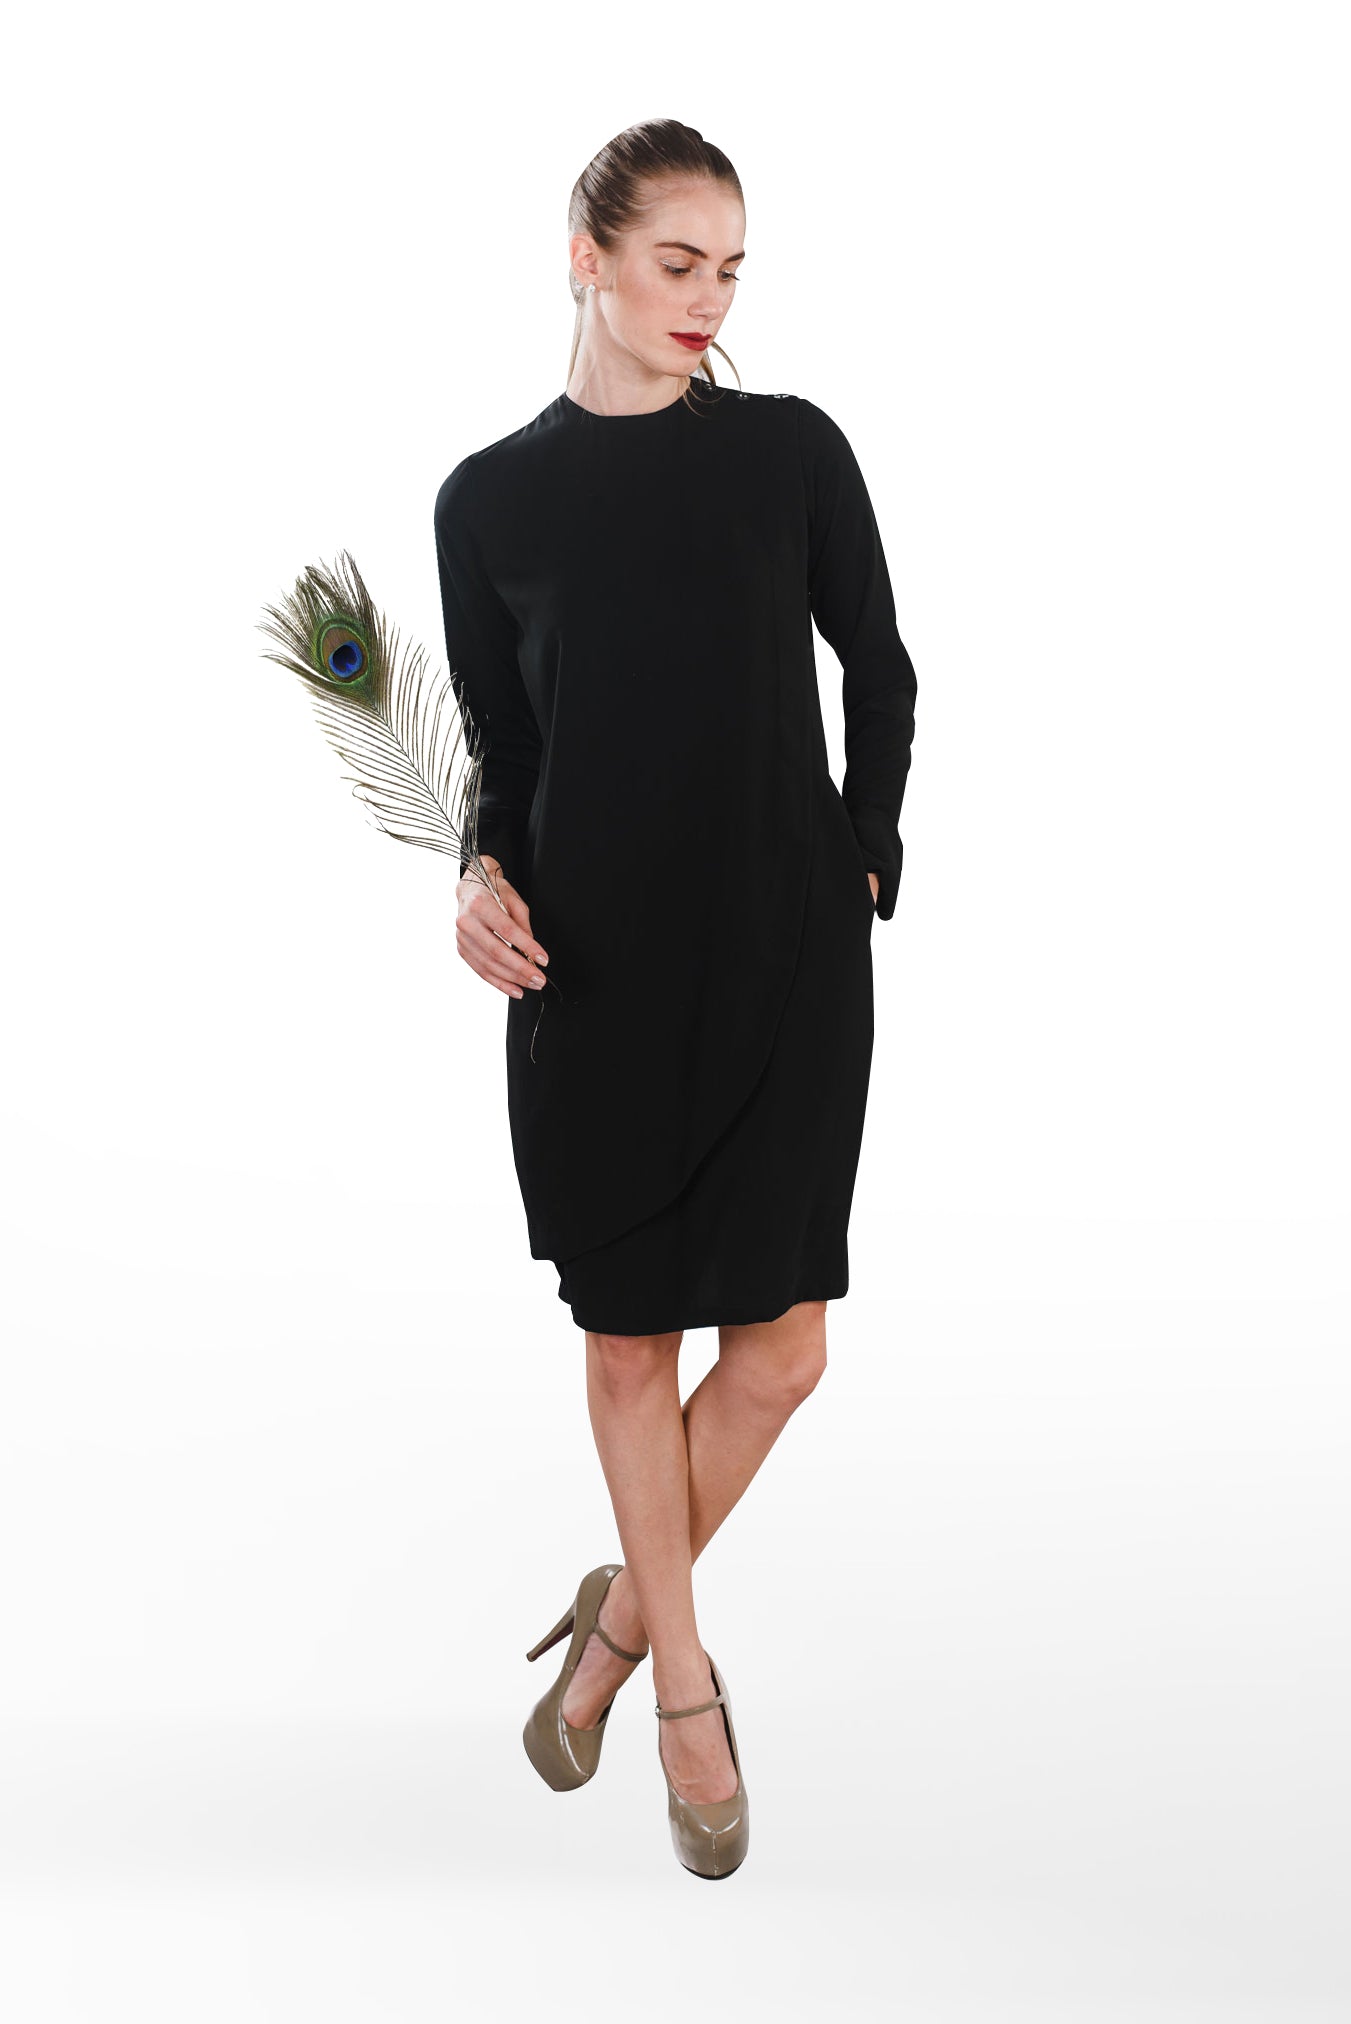 Christine- women's formal black dress with pockets for work- Modreine ...